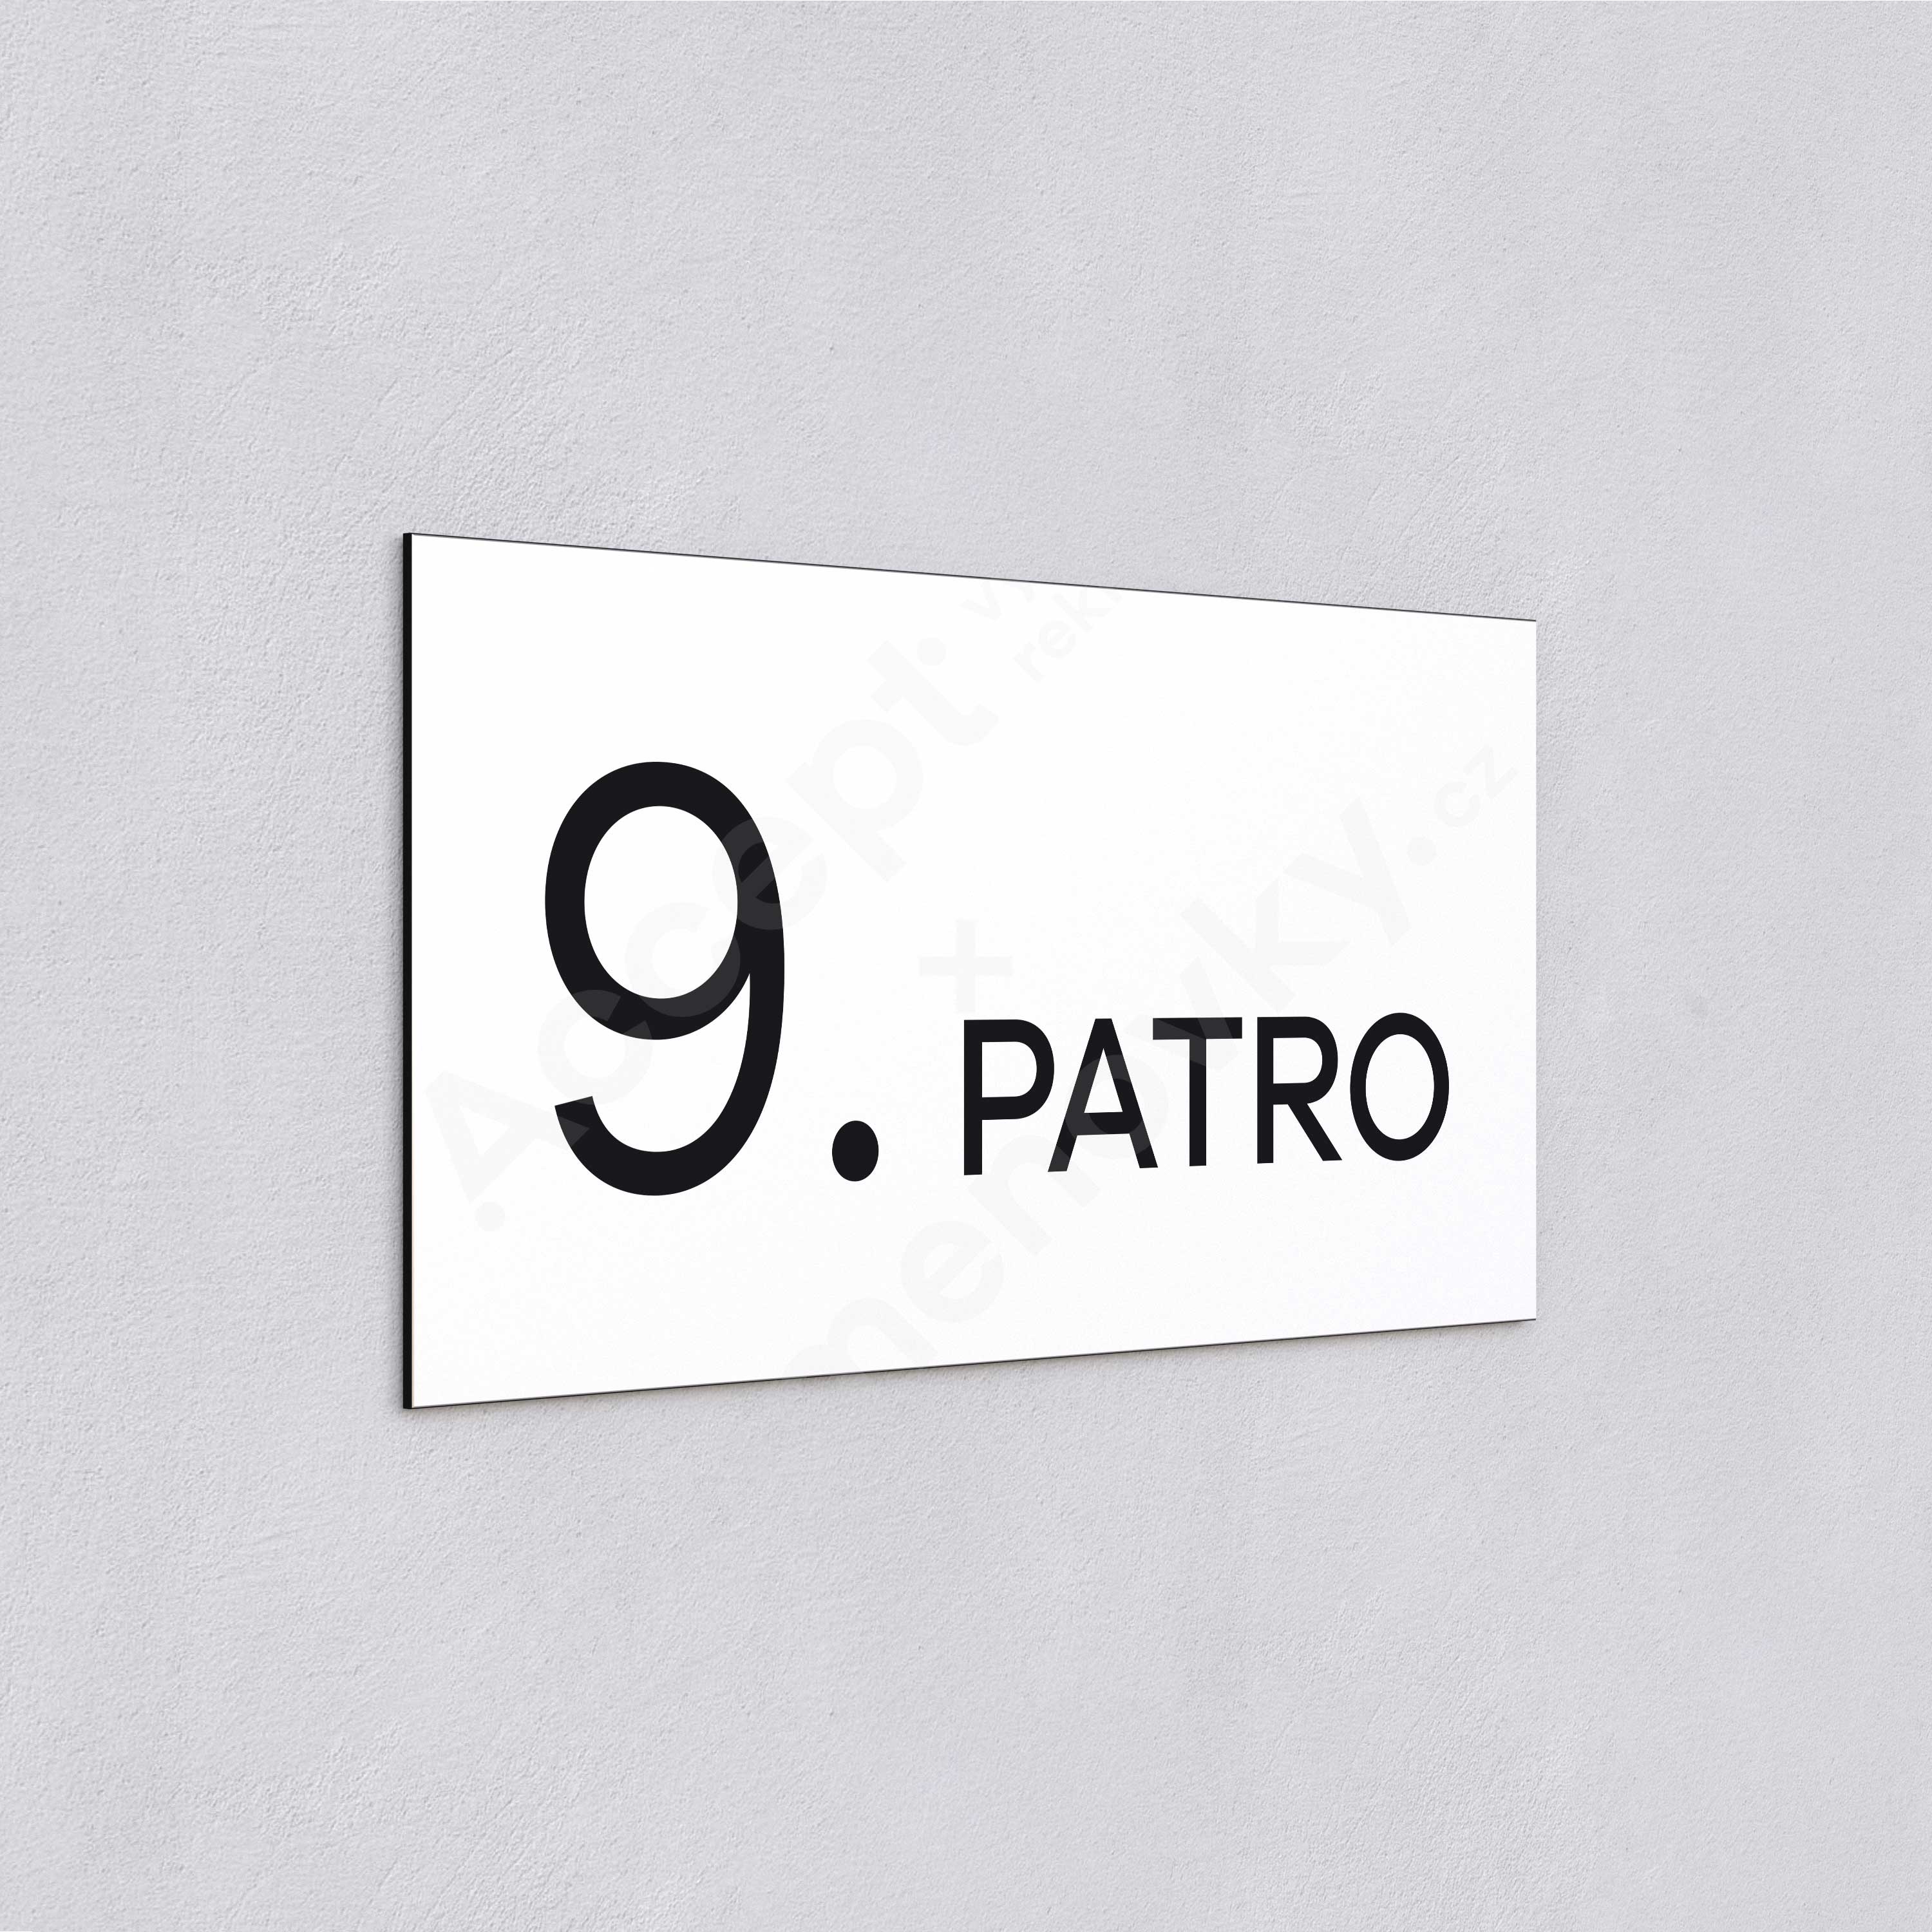 ACCEPT Označení podlaží "9. PATRO" (300 x 150 mm) - bílá tabulka - černý popis